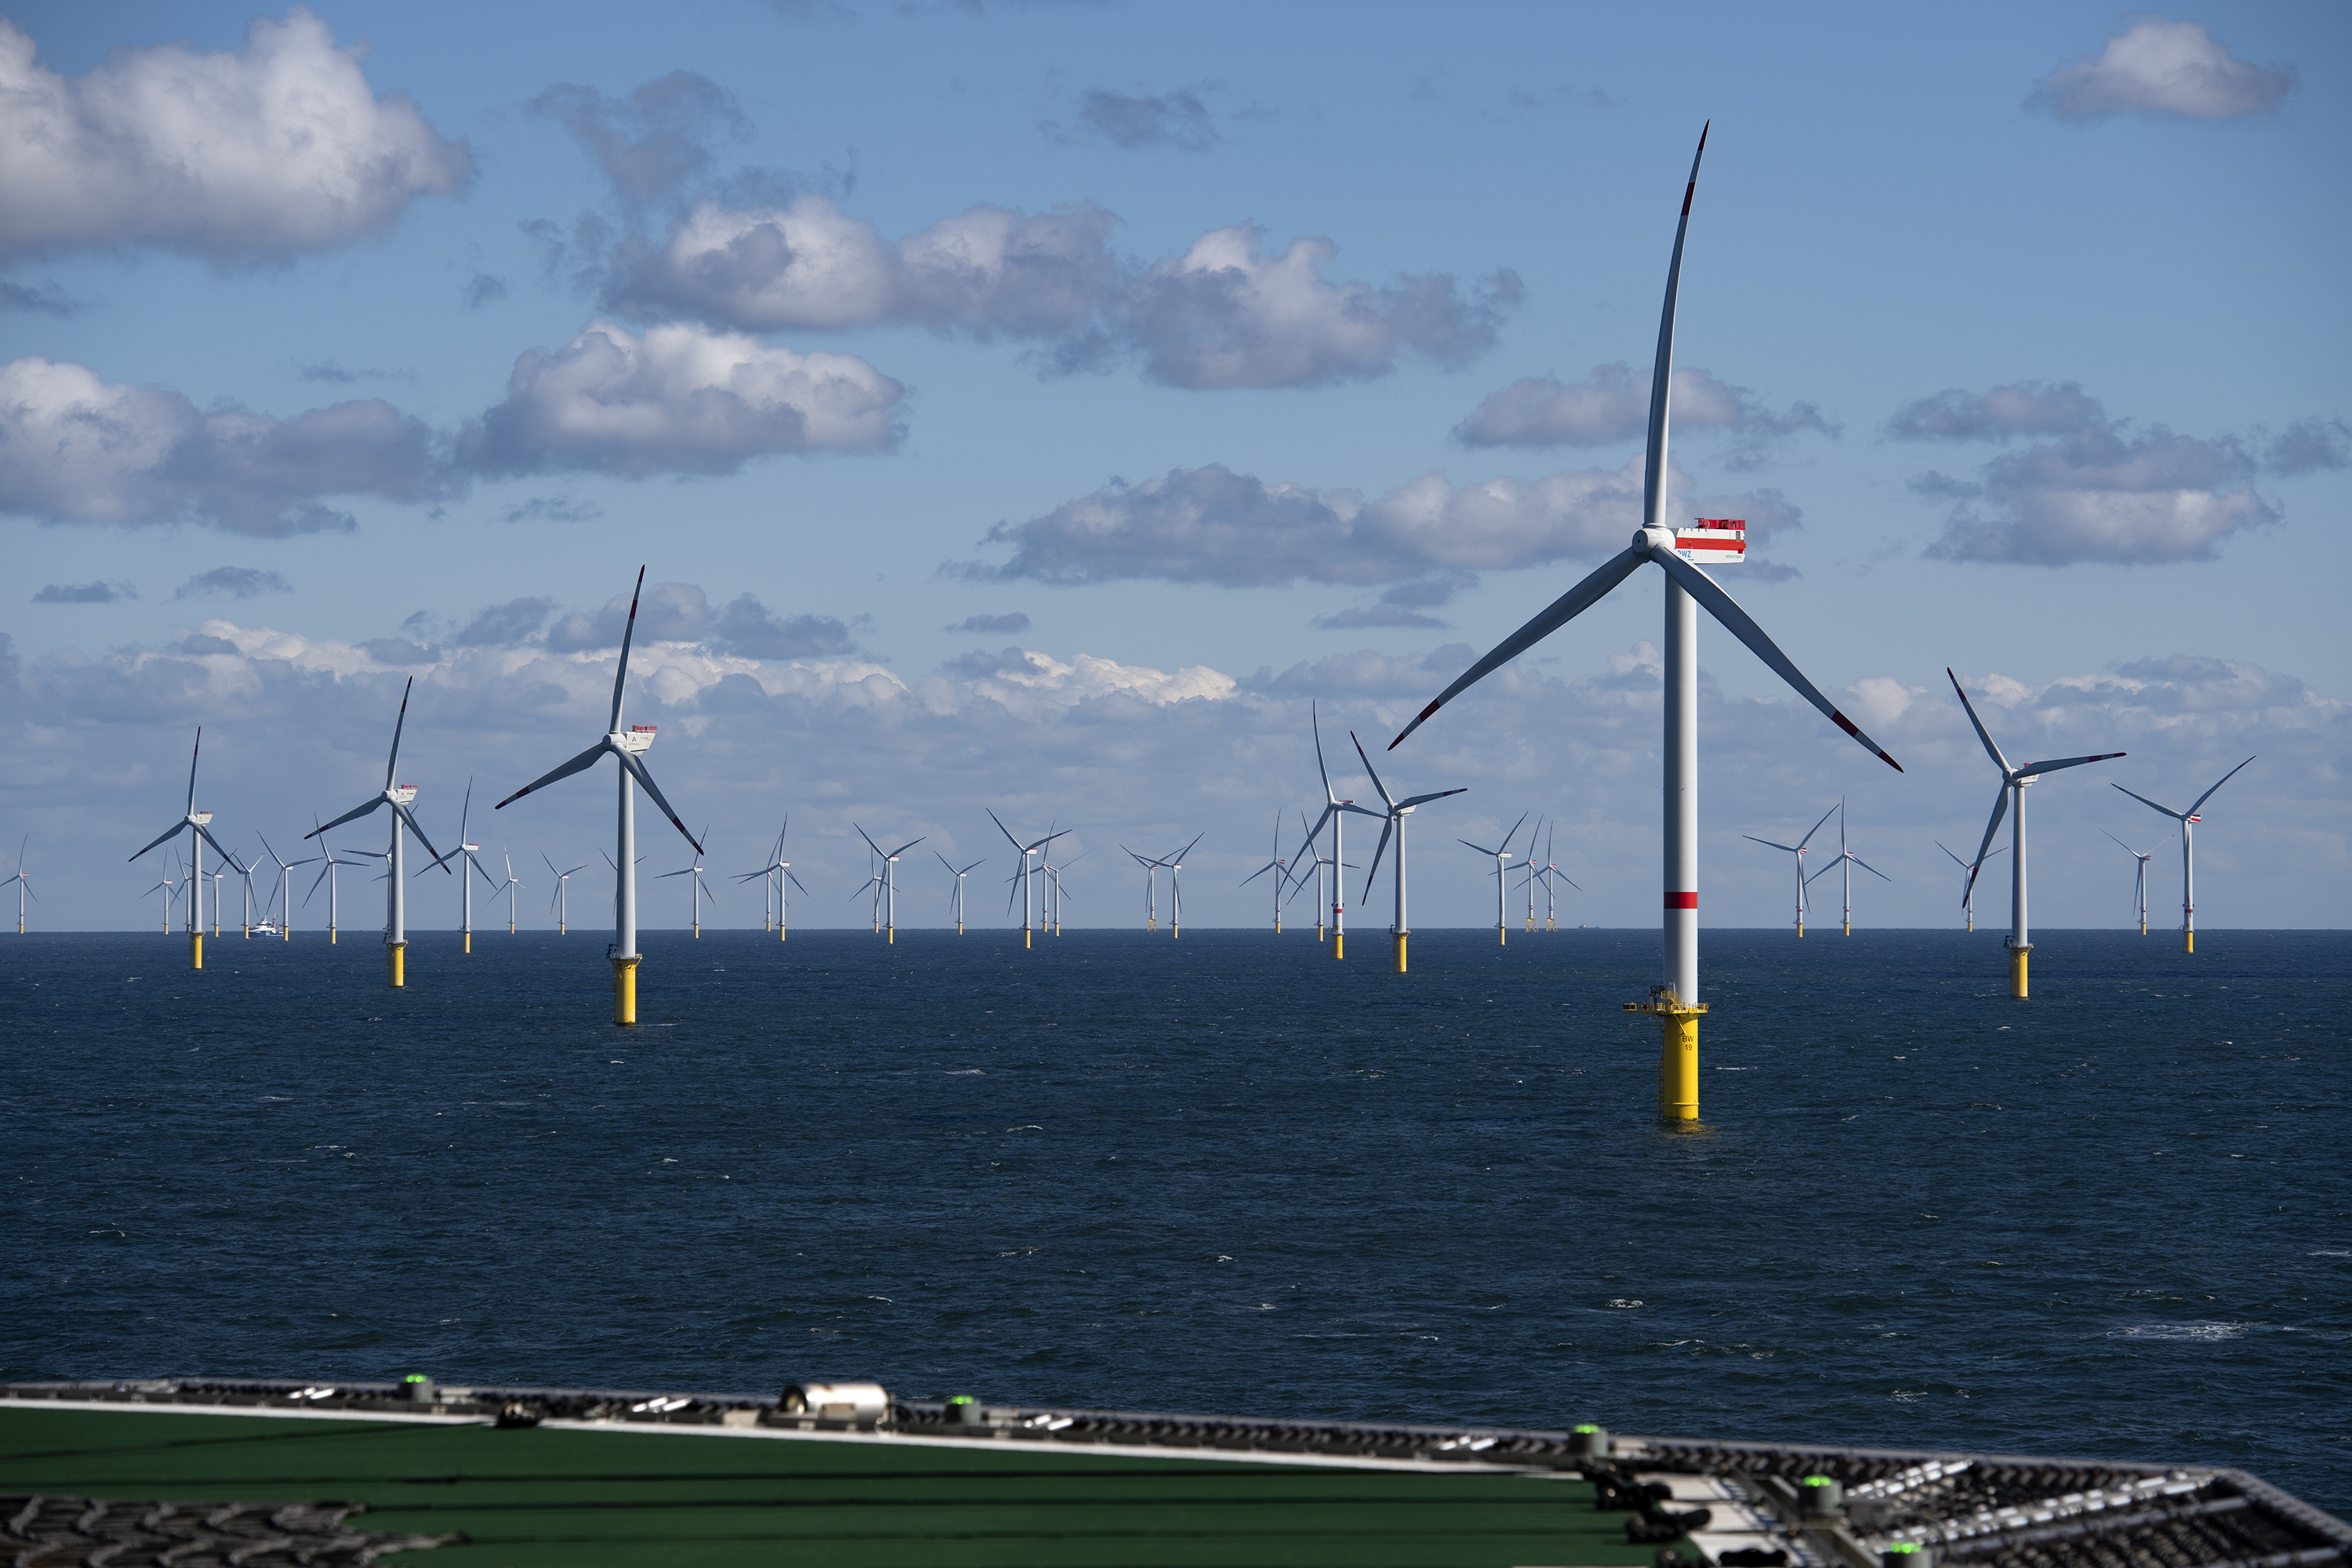 Trianel Windpark Borkum II offshore wind farm